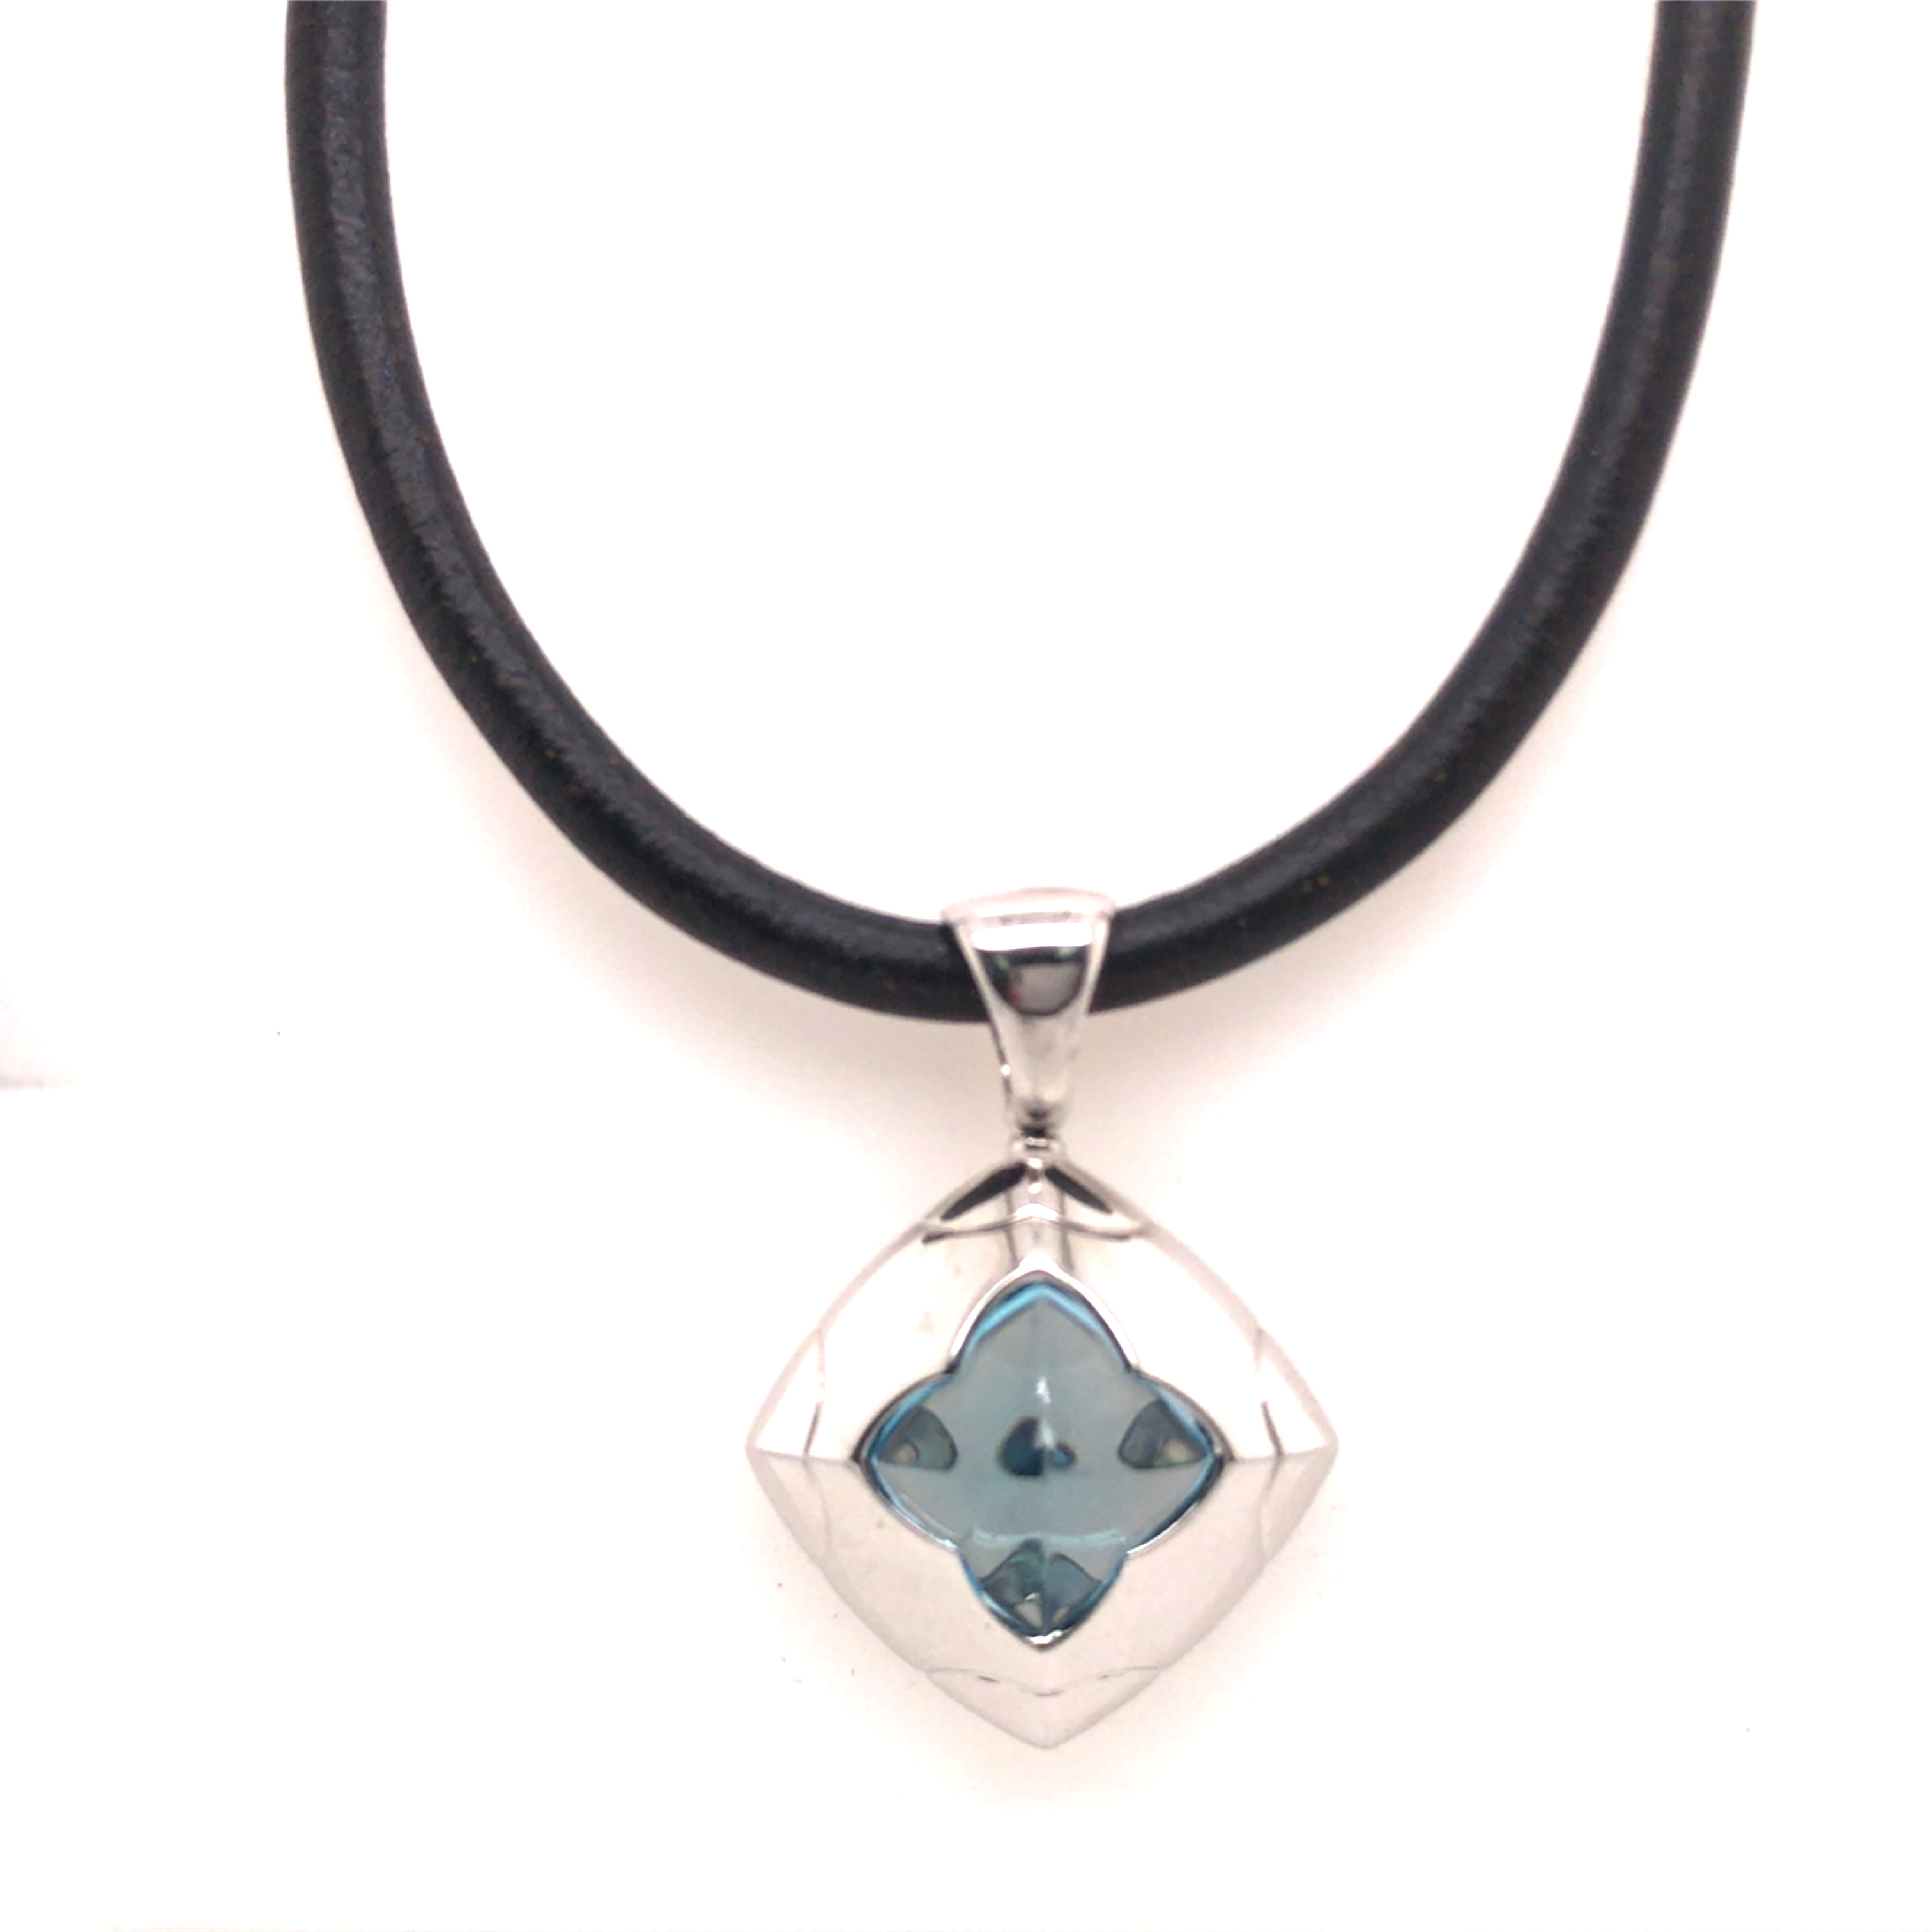 bvlgari blue necklace